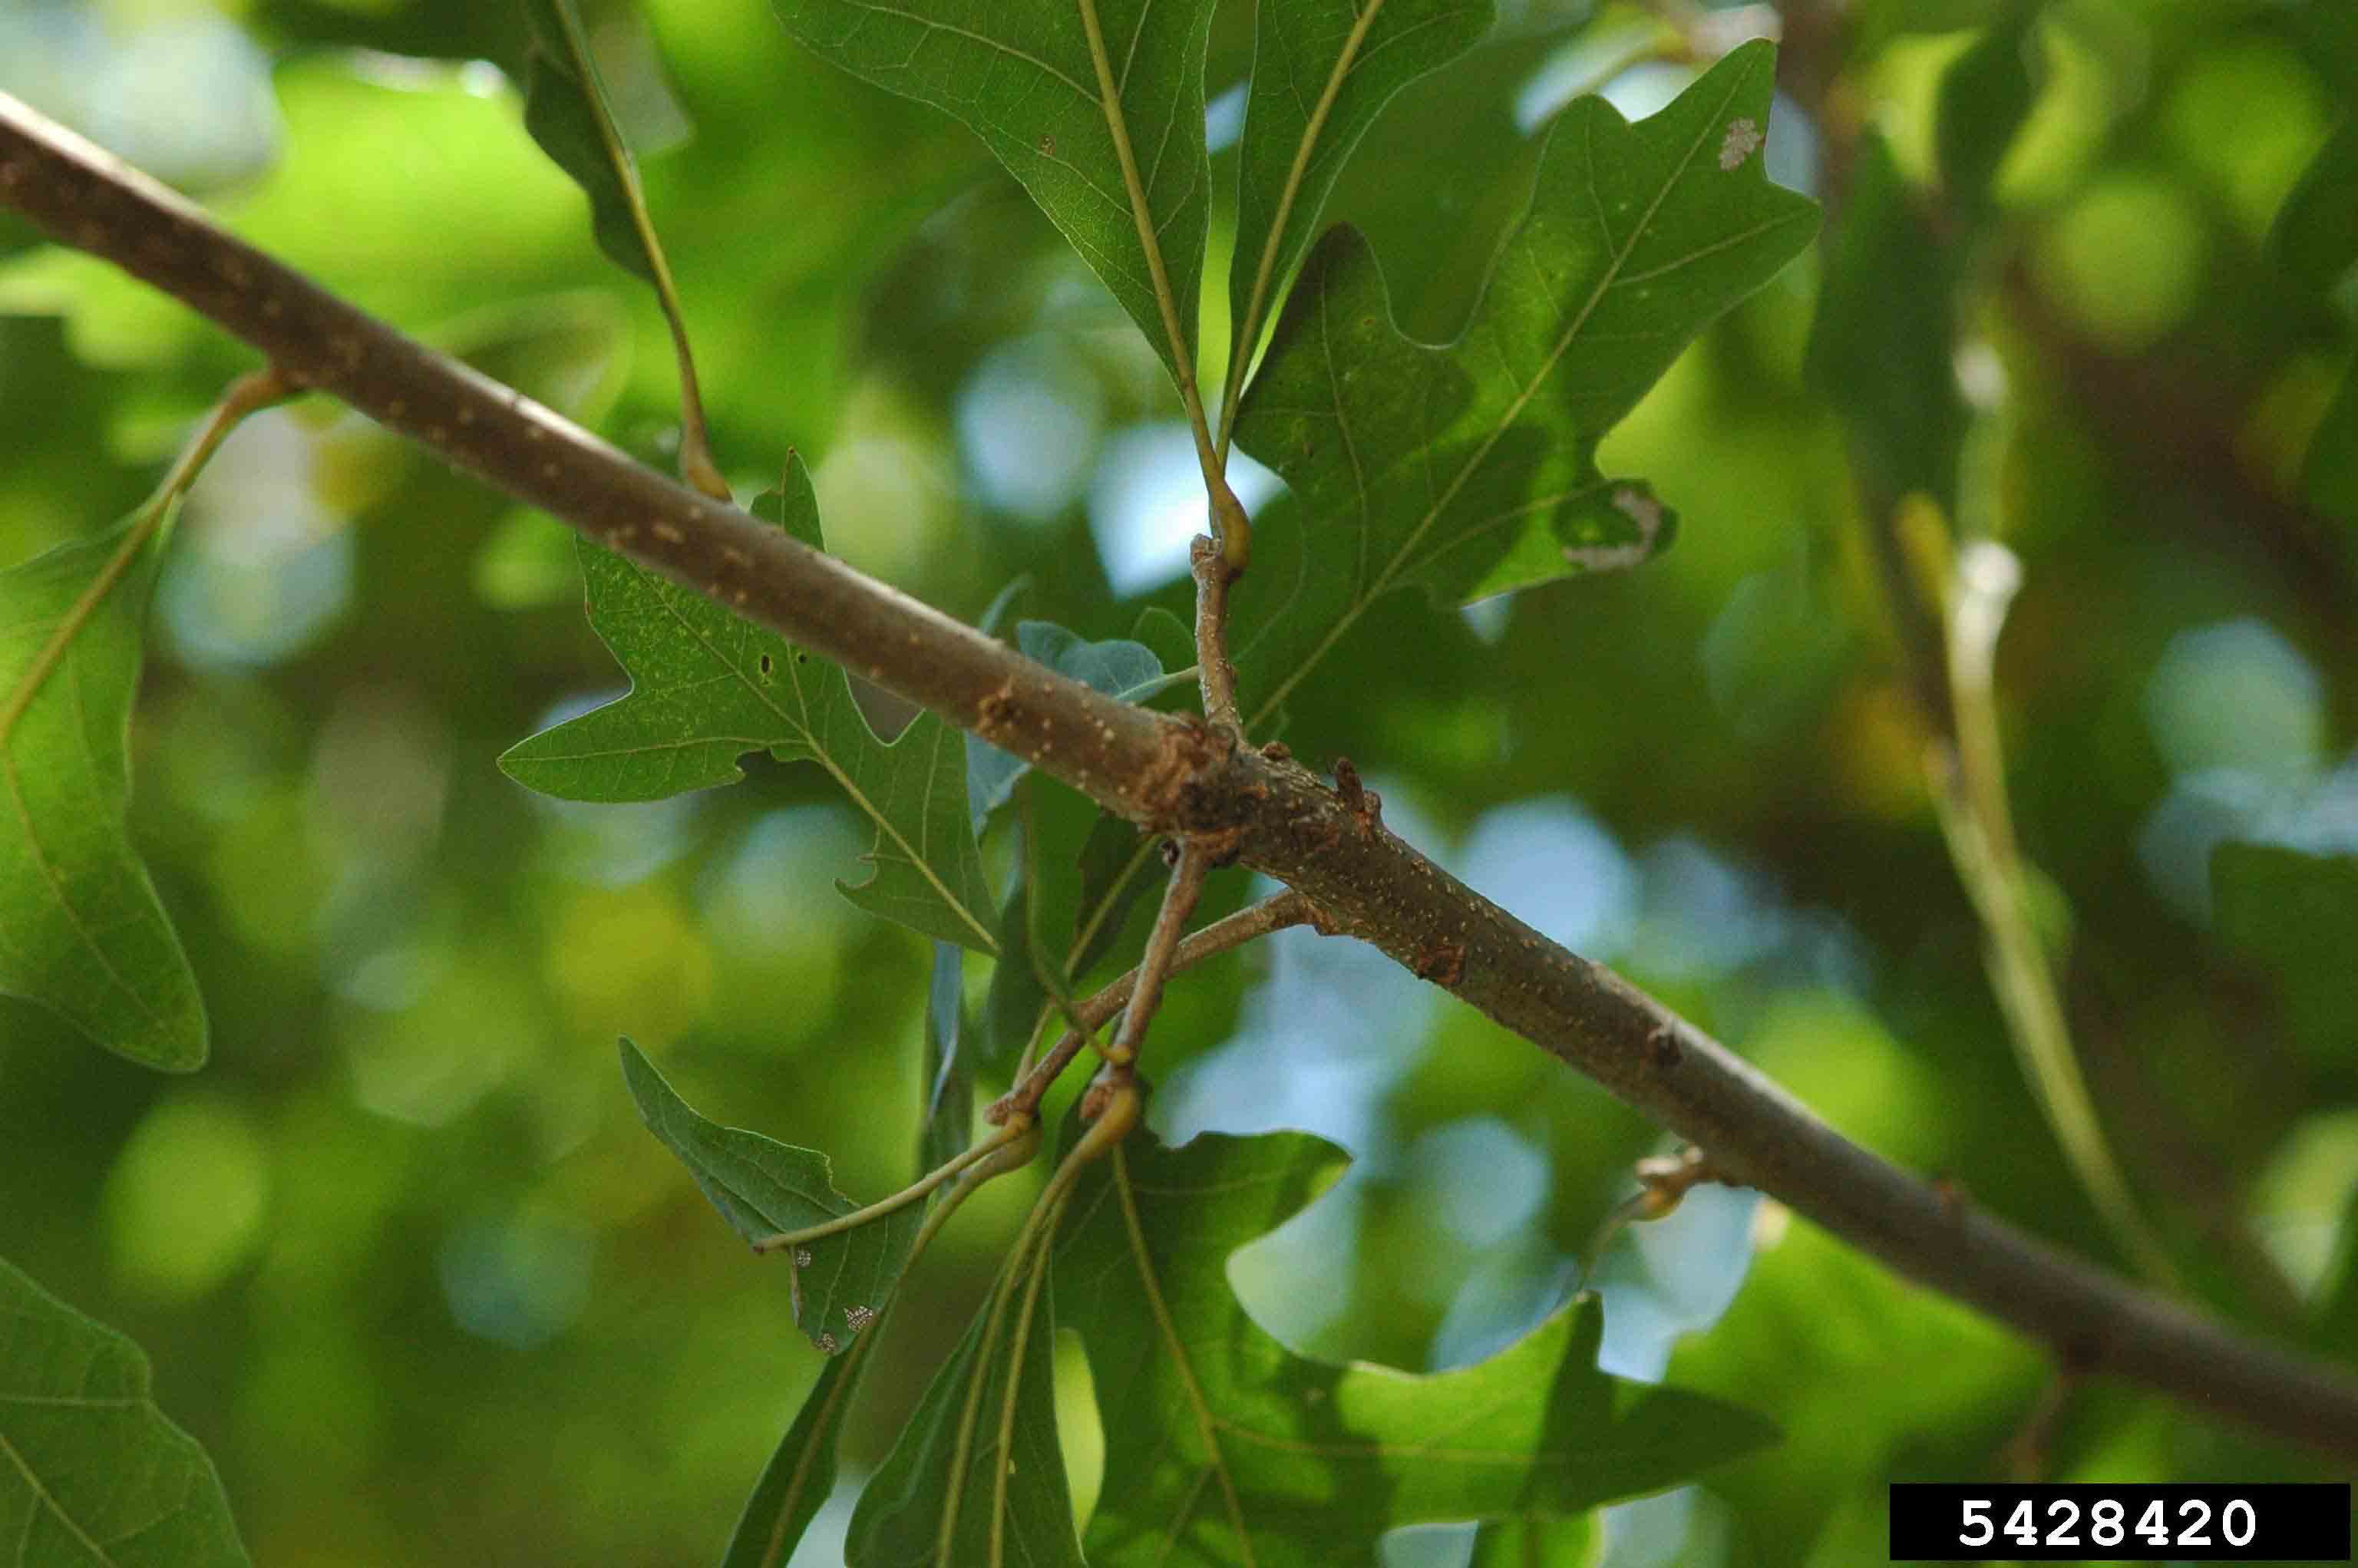 Overcup oak stem